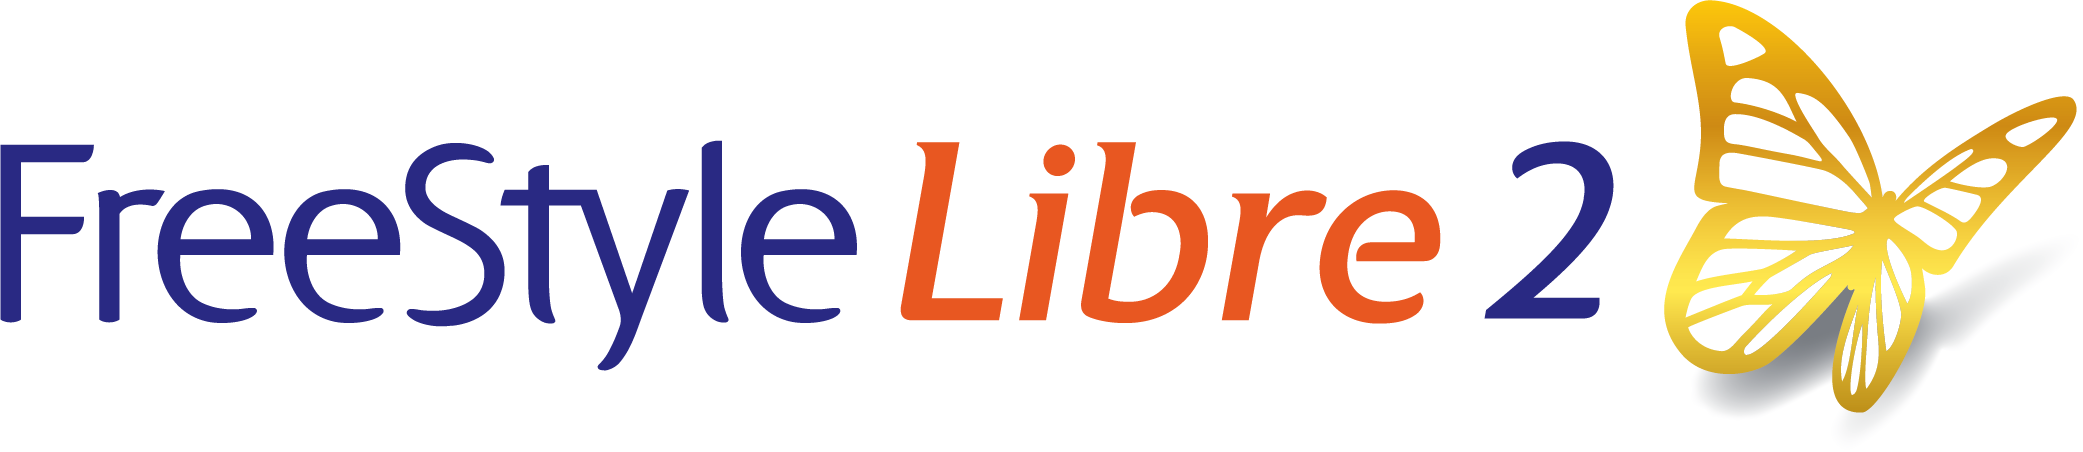 Abbott FreeStyle Libre 2 logo